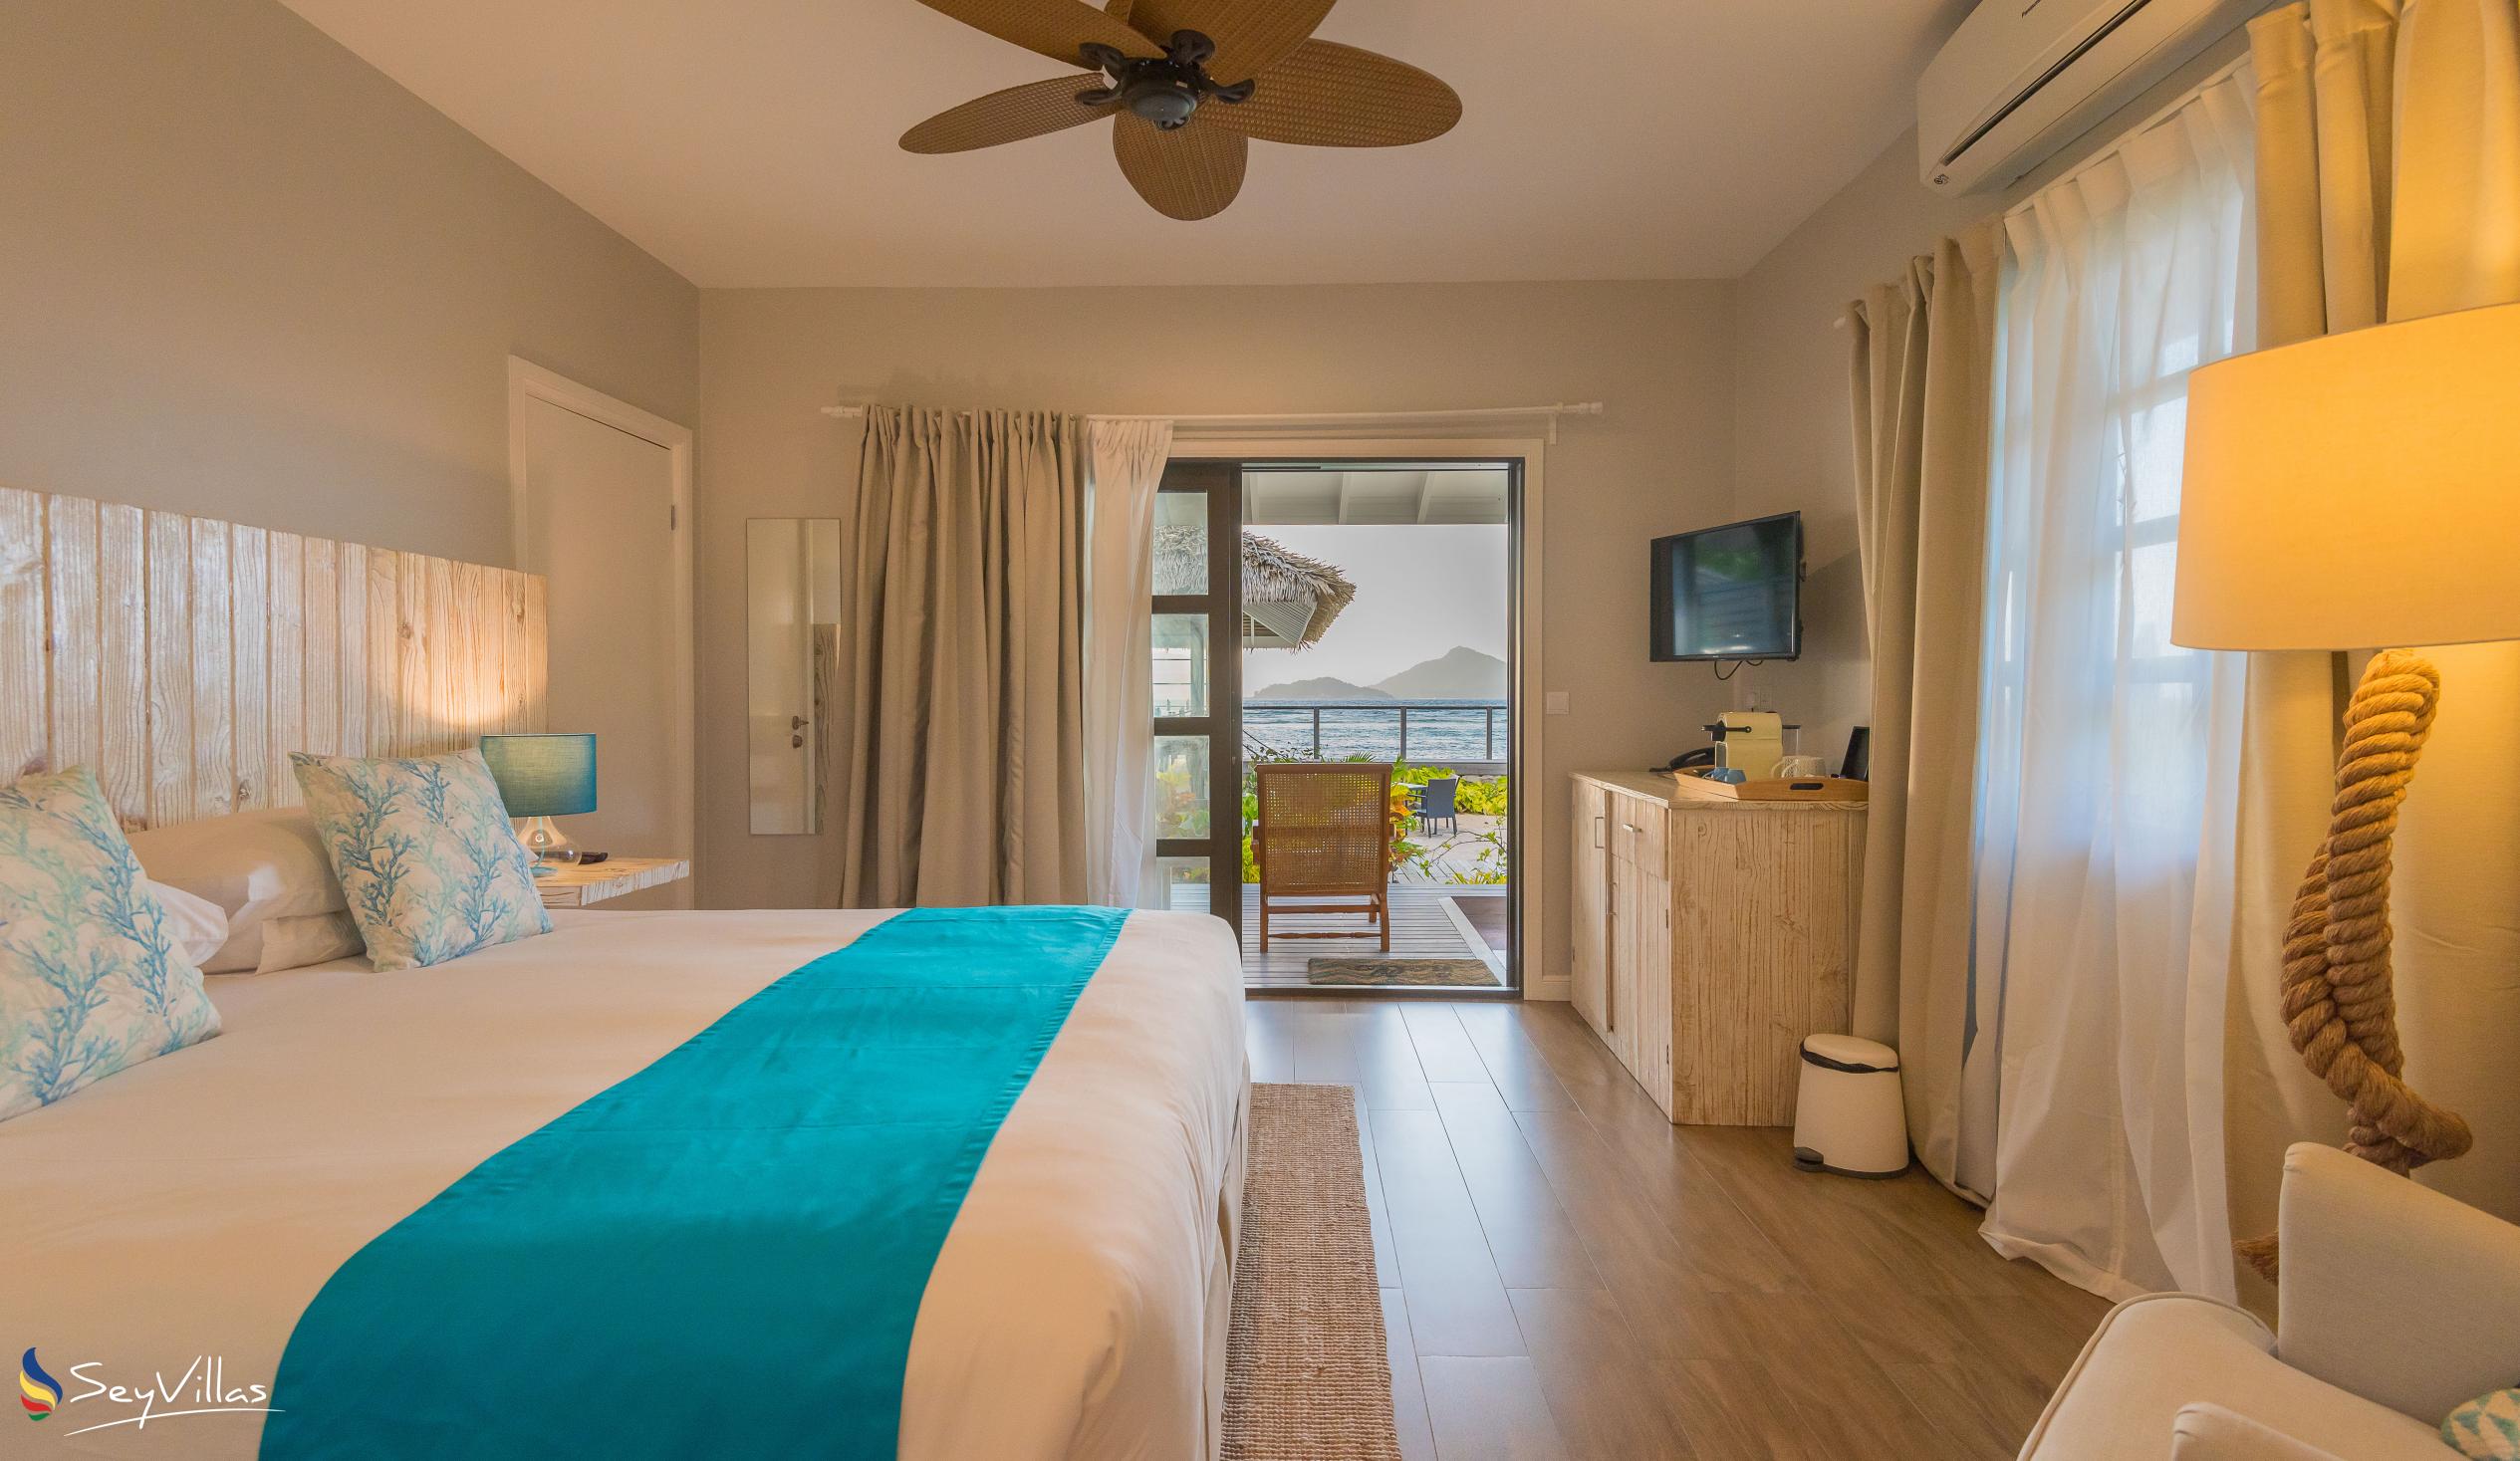 Foto 16: Le Nautique Luxury Waterfront Hotel - Meerblickzimmer mit Kingsize-Bett - La Digue (Seychellen)